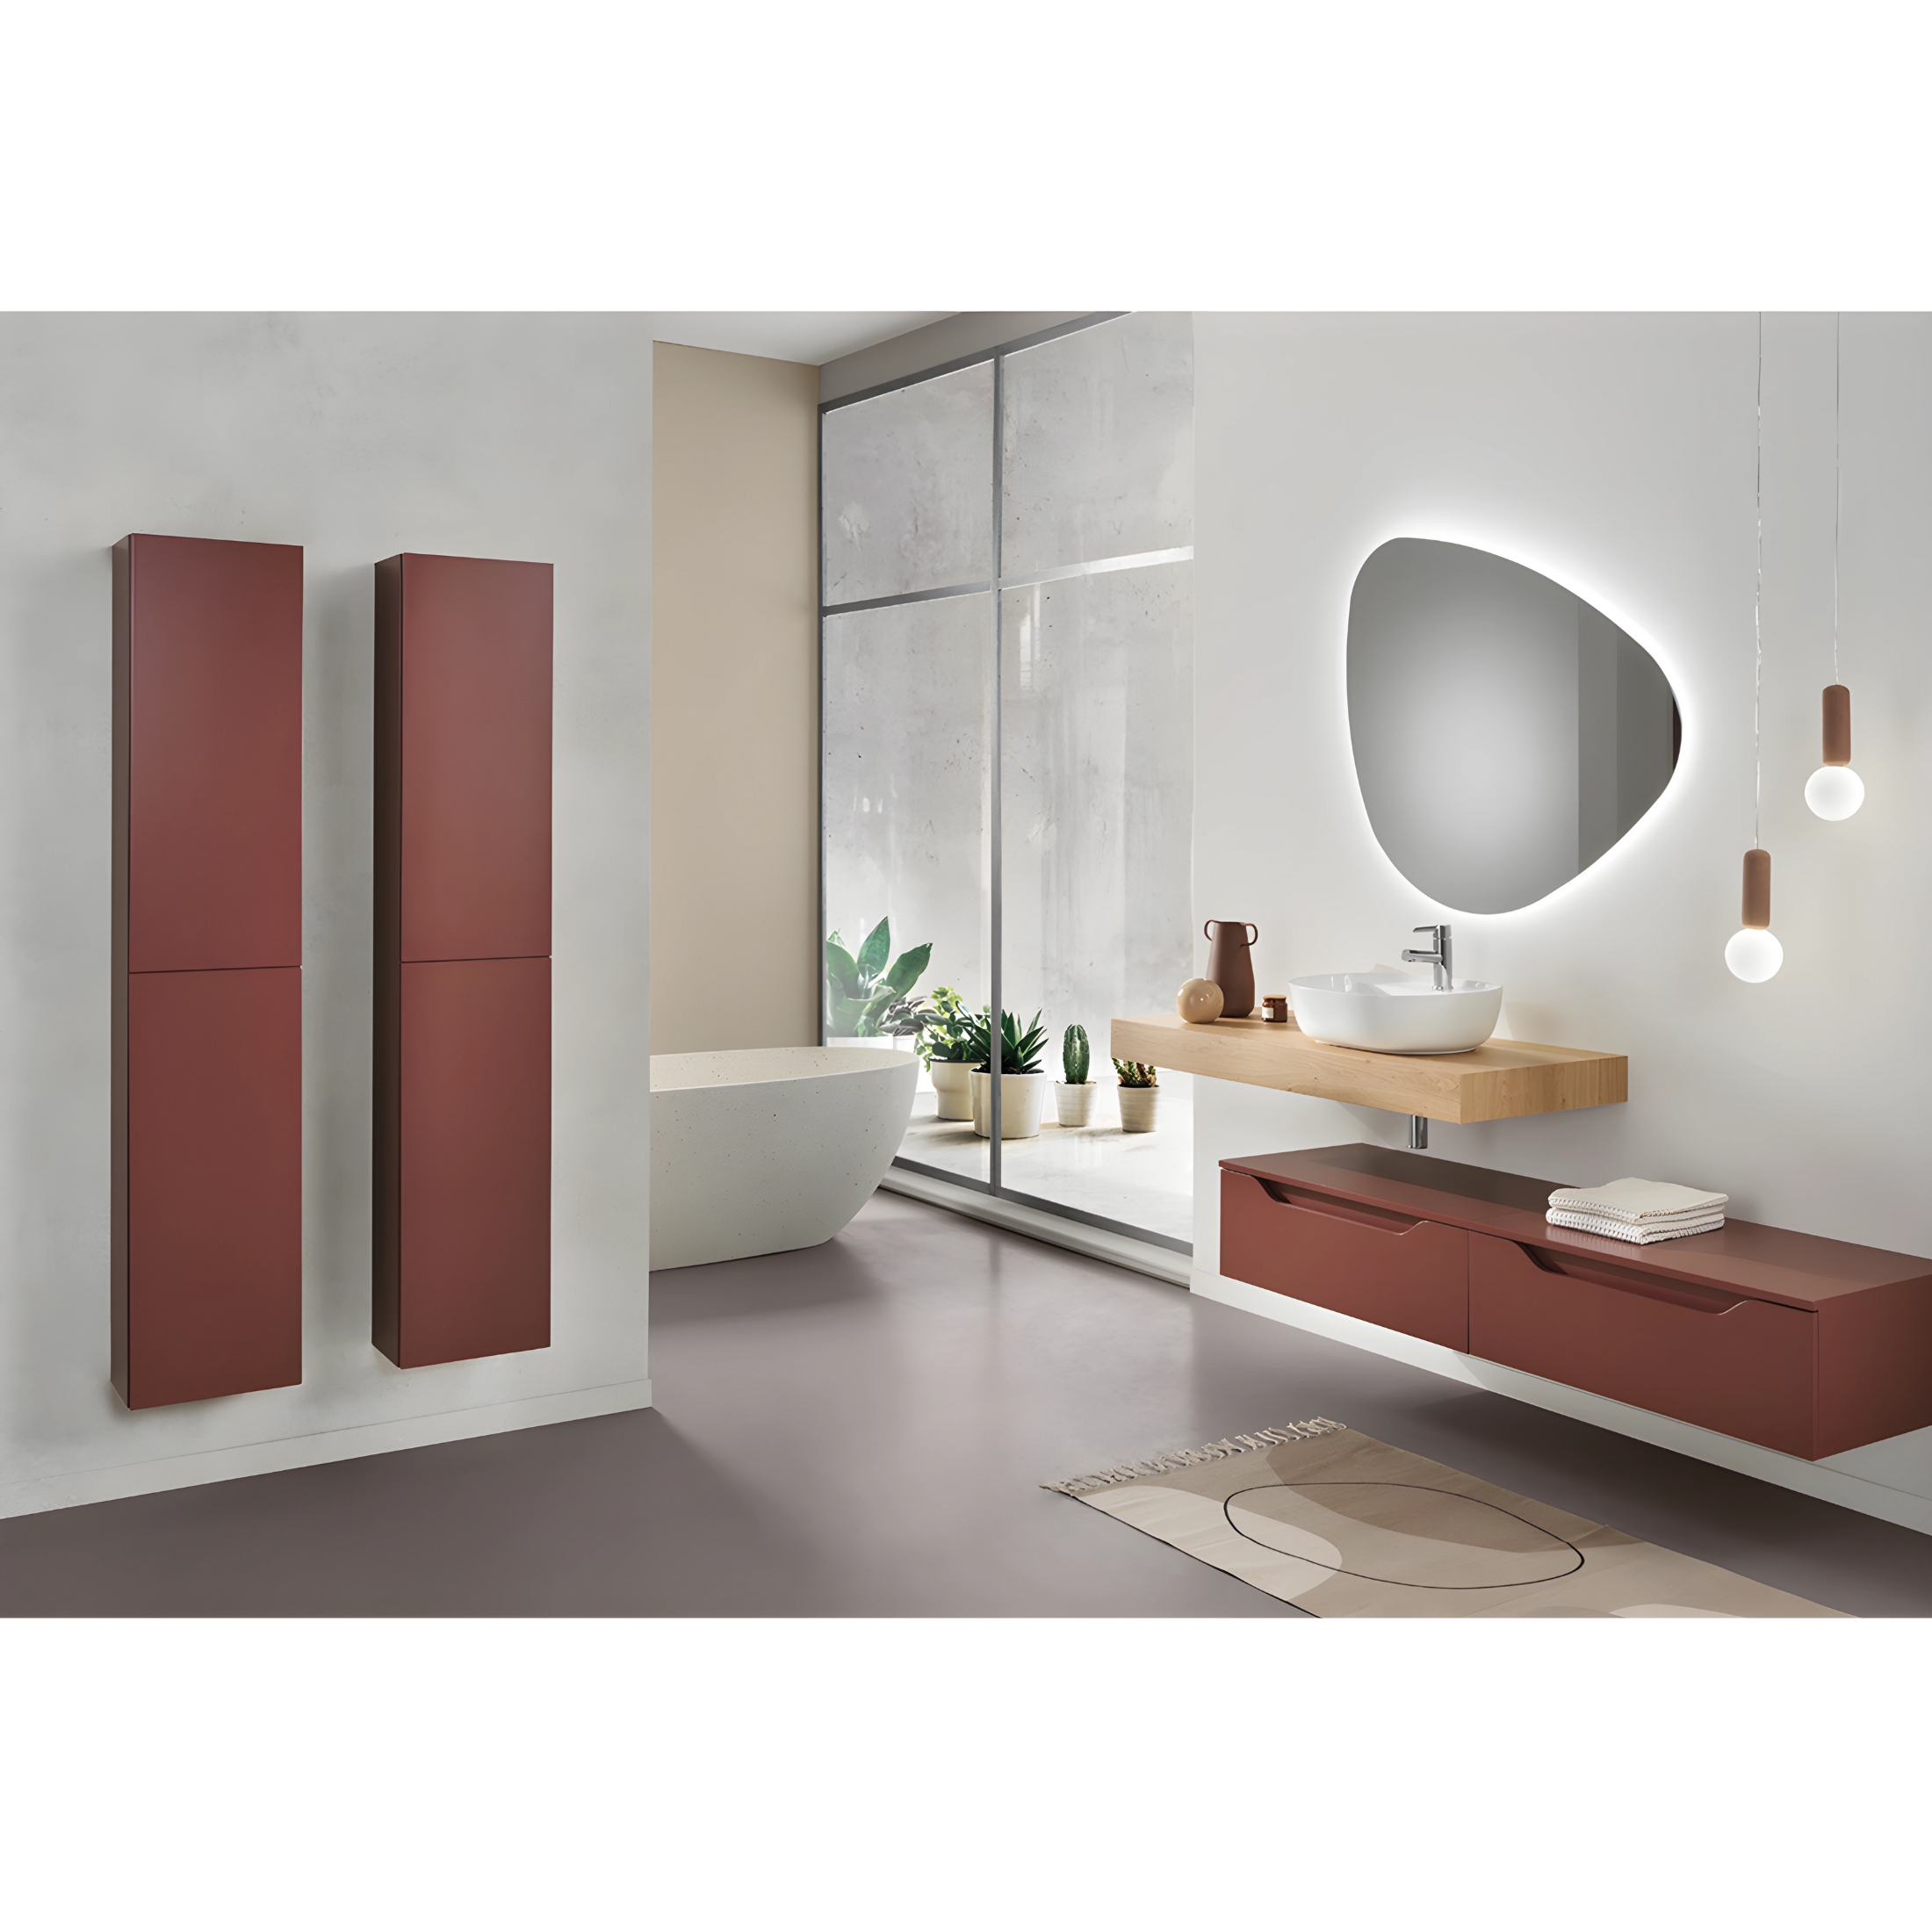 Mueble de baño suspendido "Mixi m" lavabo 2 cajones espejo LED columnas suspendidas